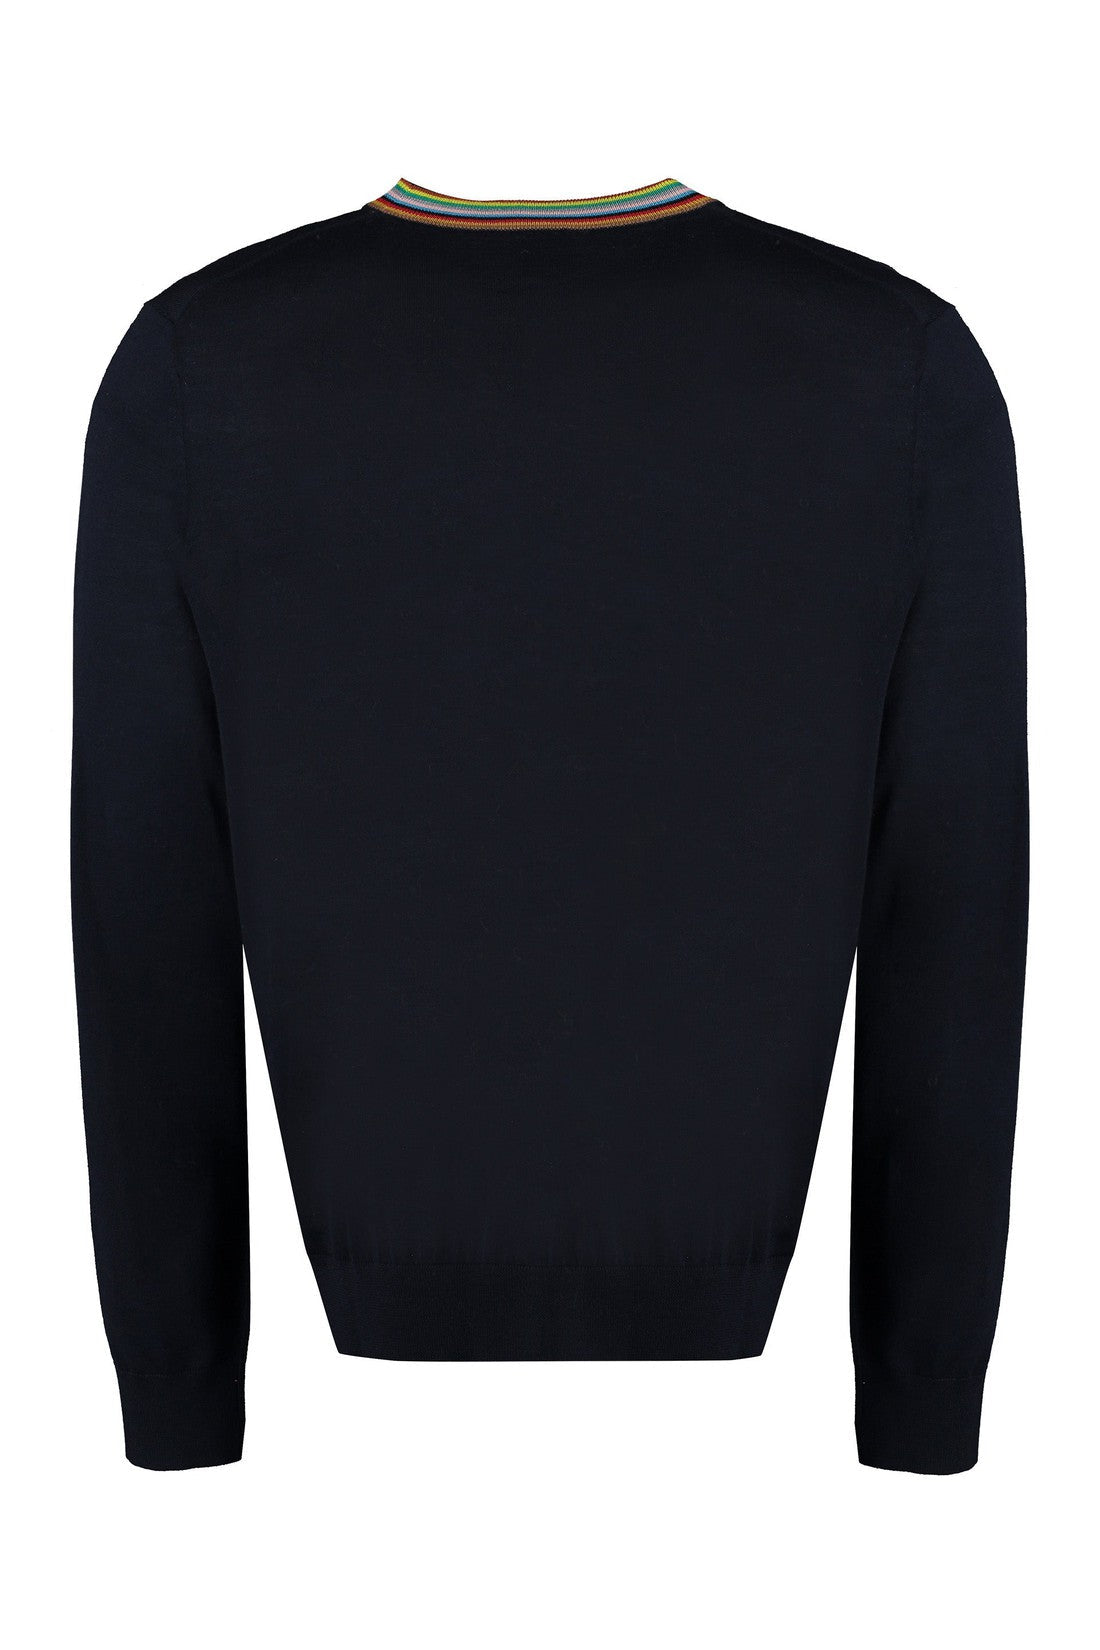 Paul Smith-OUTLET-SALE-Fine-knit sweater-ARCHIVIST